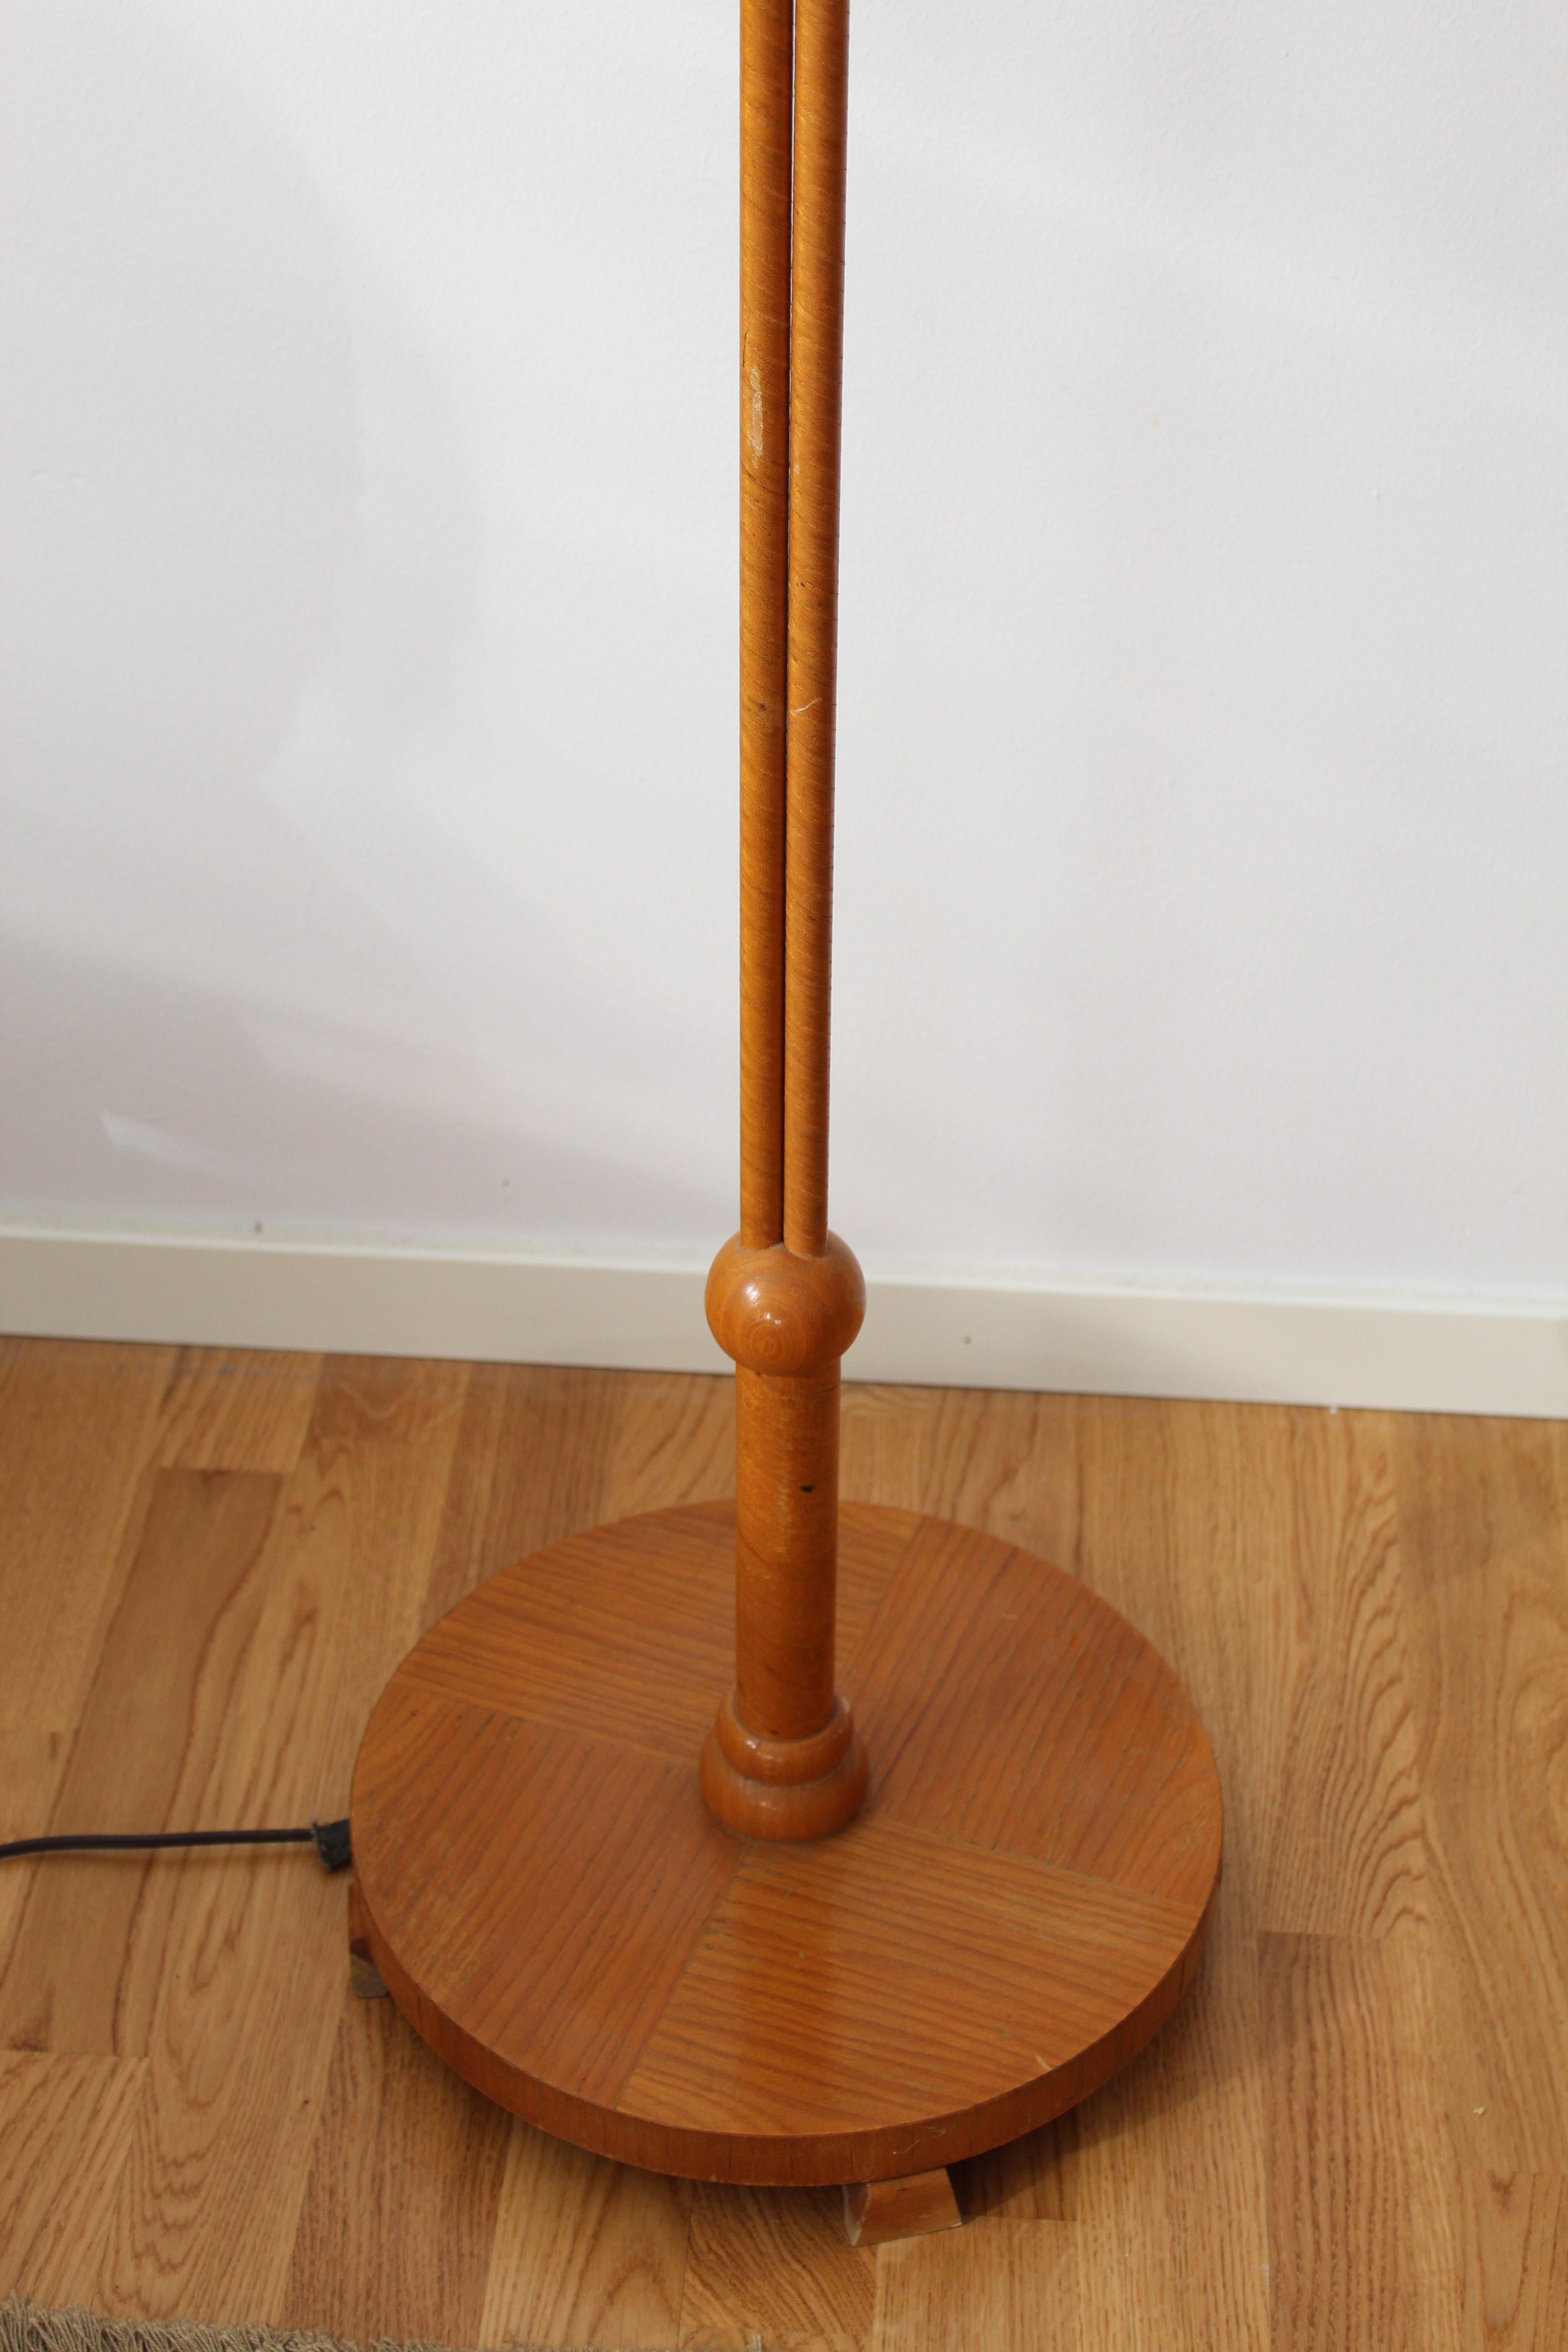 Mid-20th Century Swedish, Organic Two-Armed Floor Lamp, Brass, Wood, Fabric, 1930s